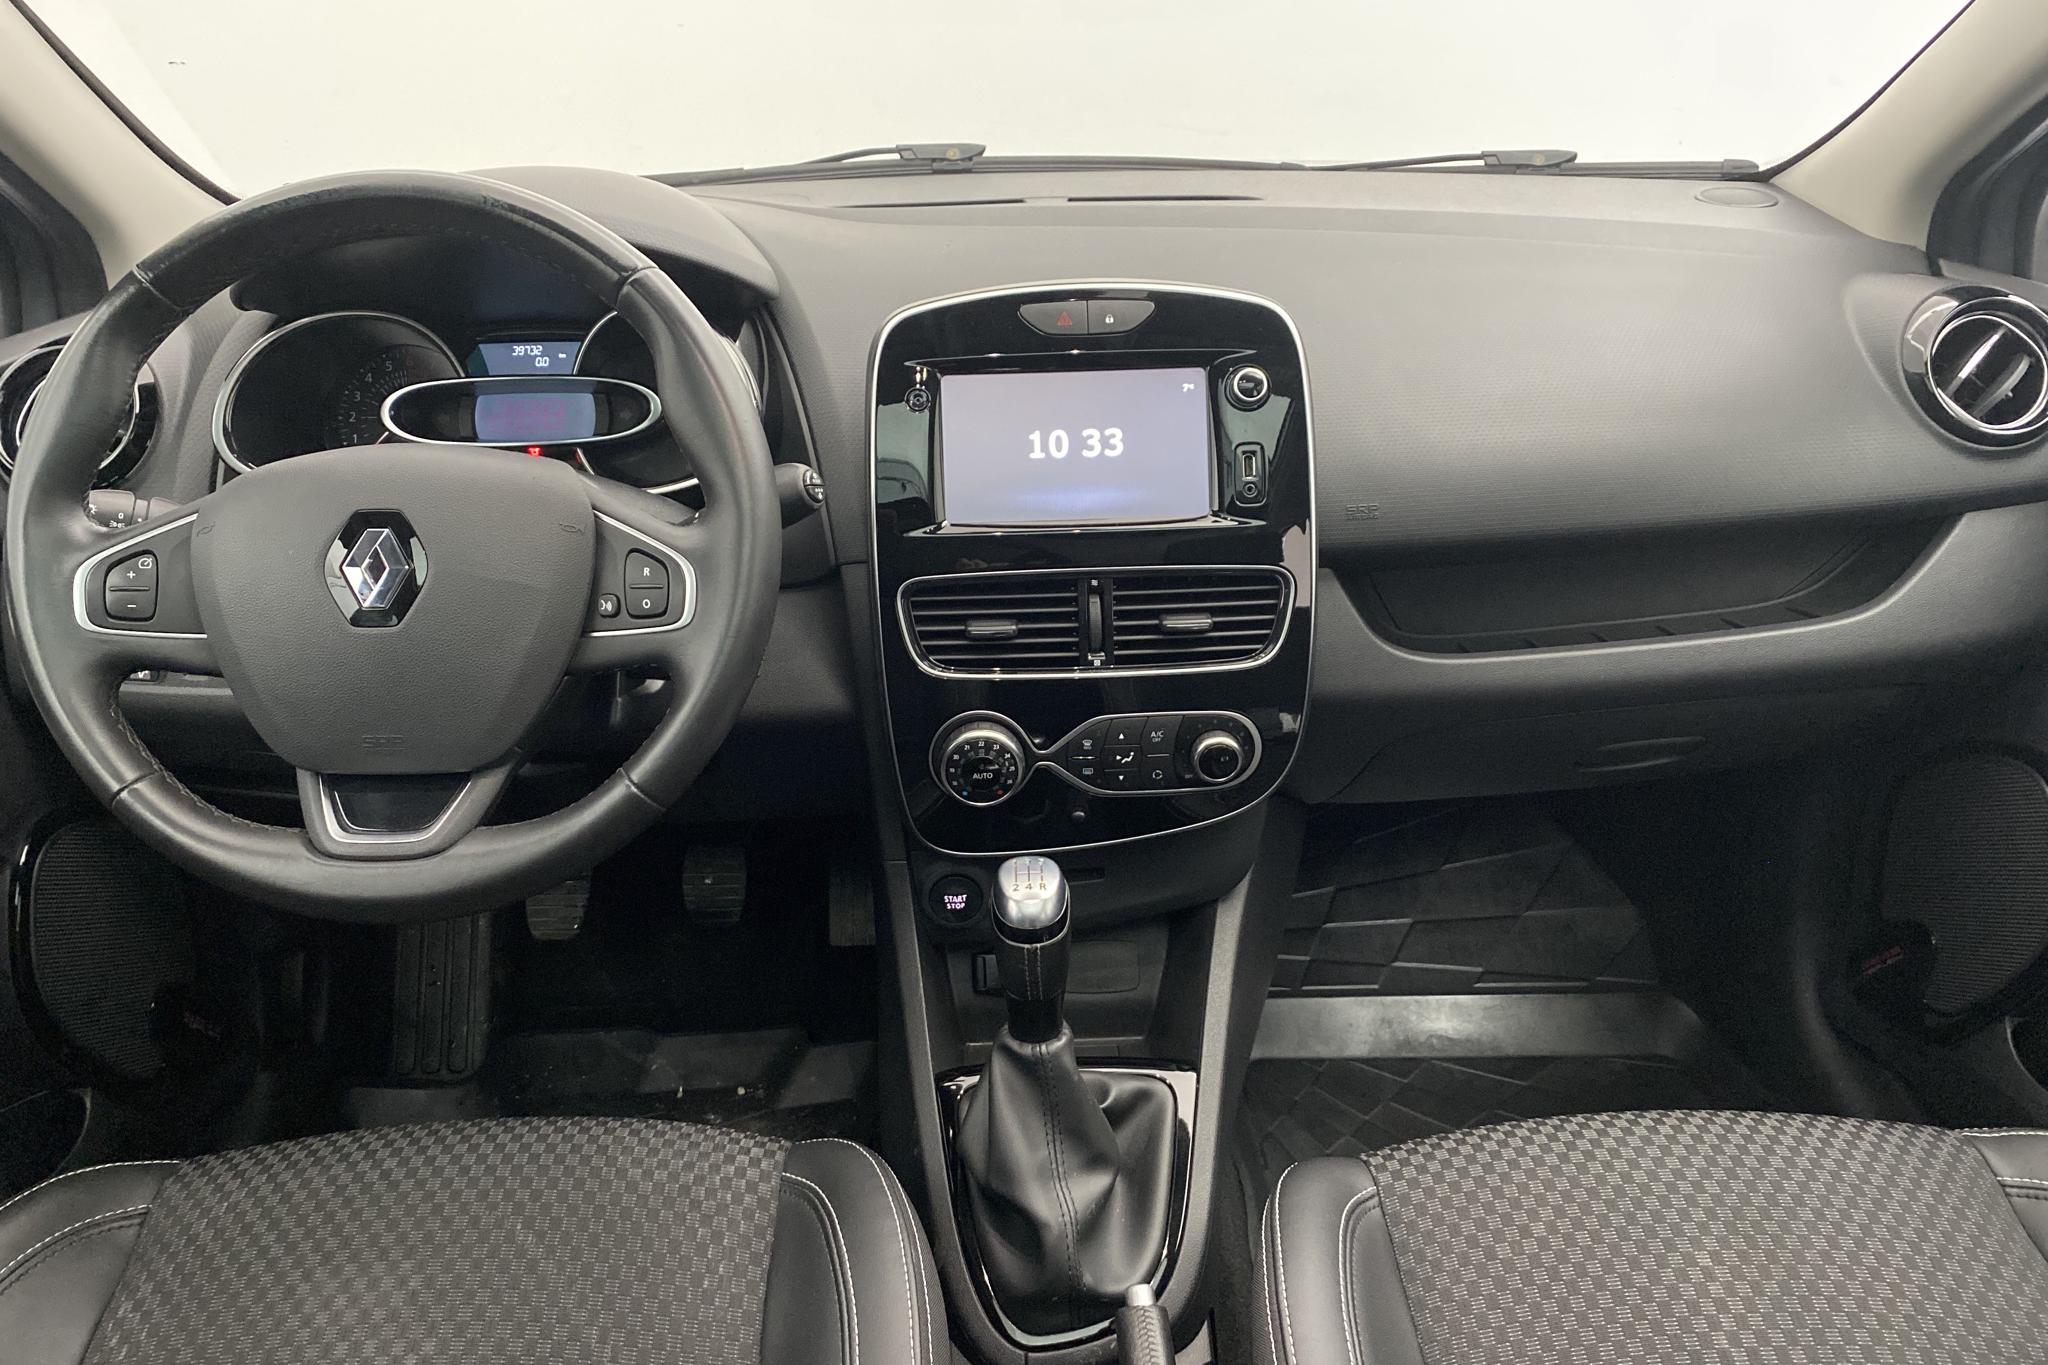 Renault Clio IV 0.9 TCe 90 5dr (90hk) - 3 973 mil - Manuell - grå - 2018